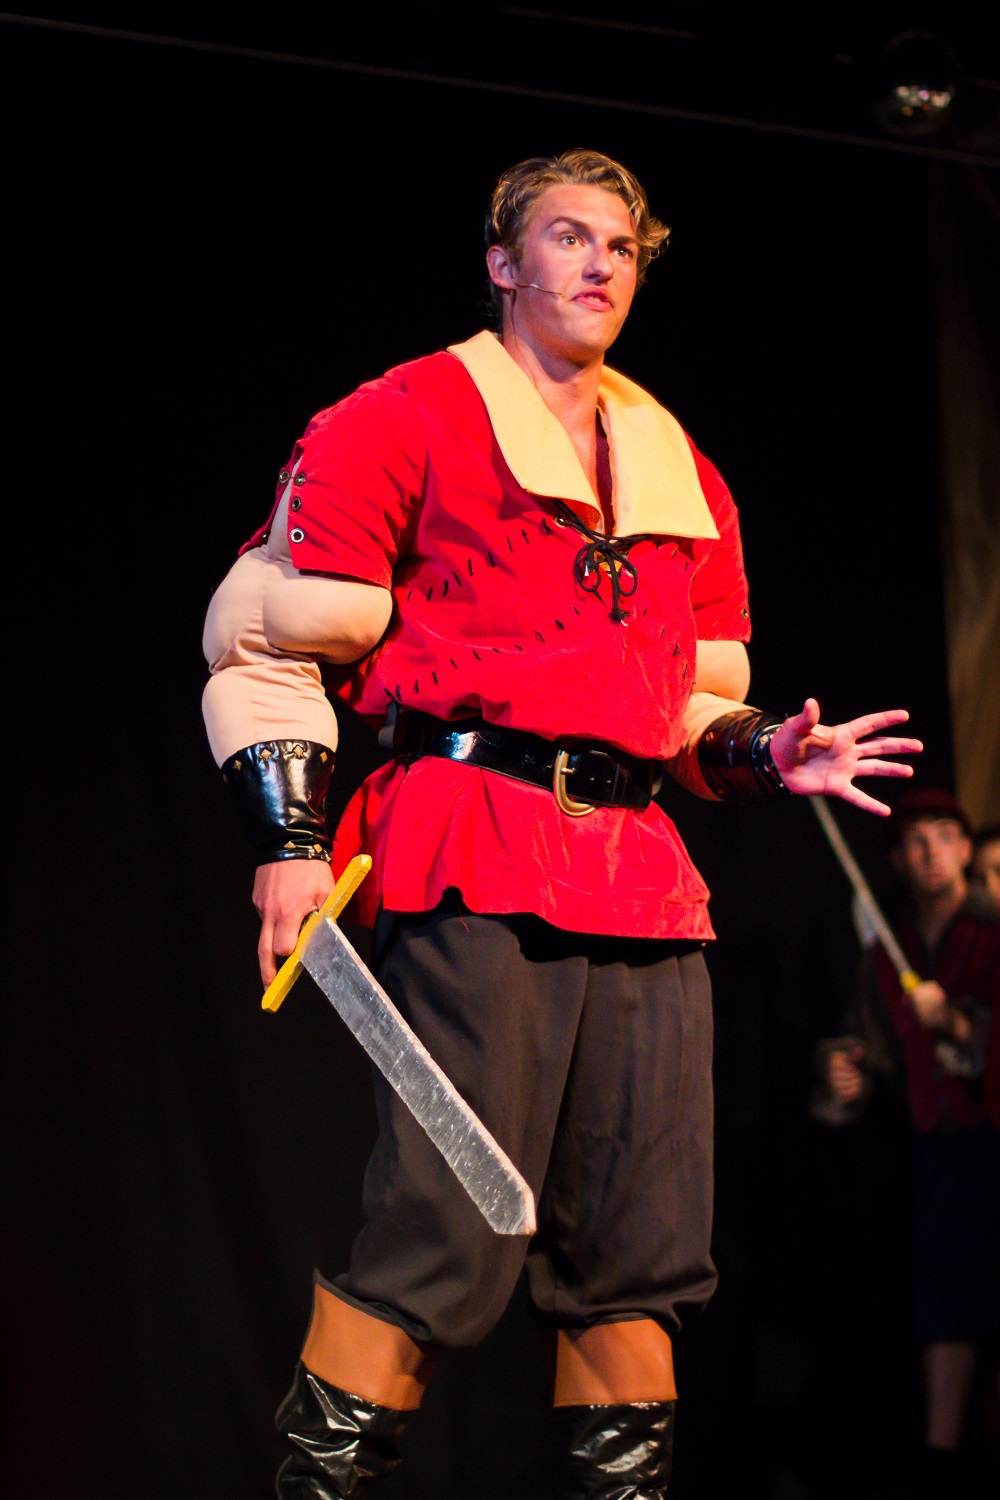 Beauty and the Beast - Ben Hartesveldt as Gaston - Yosemite High School Apr 26 2014 - photo by Virginia Lazar